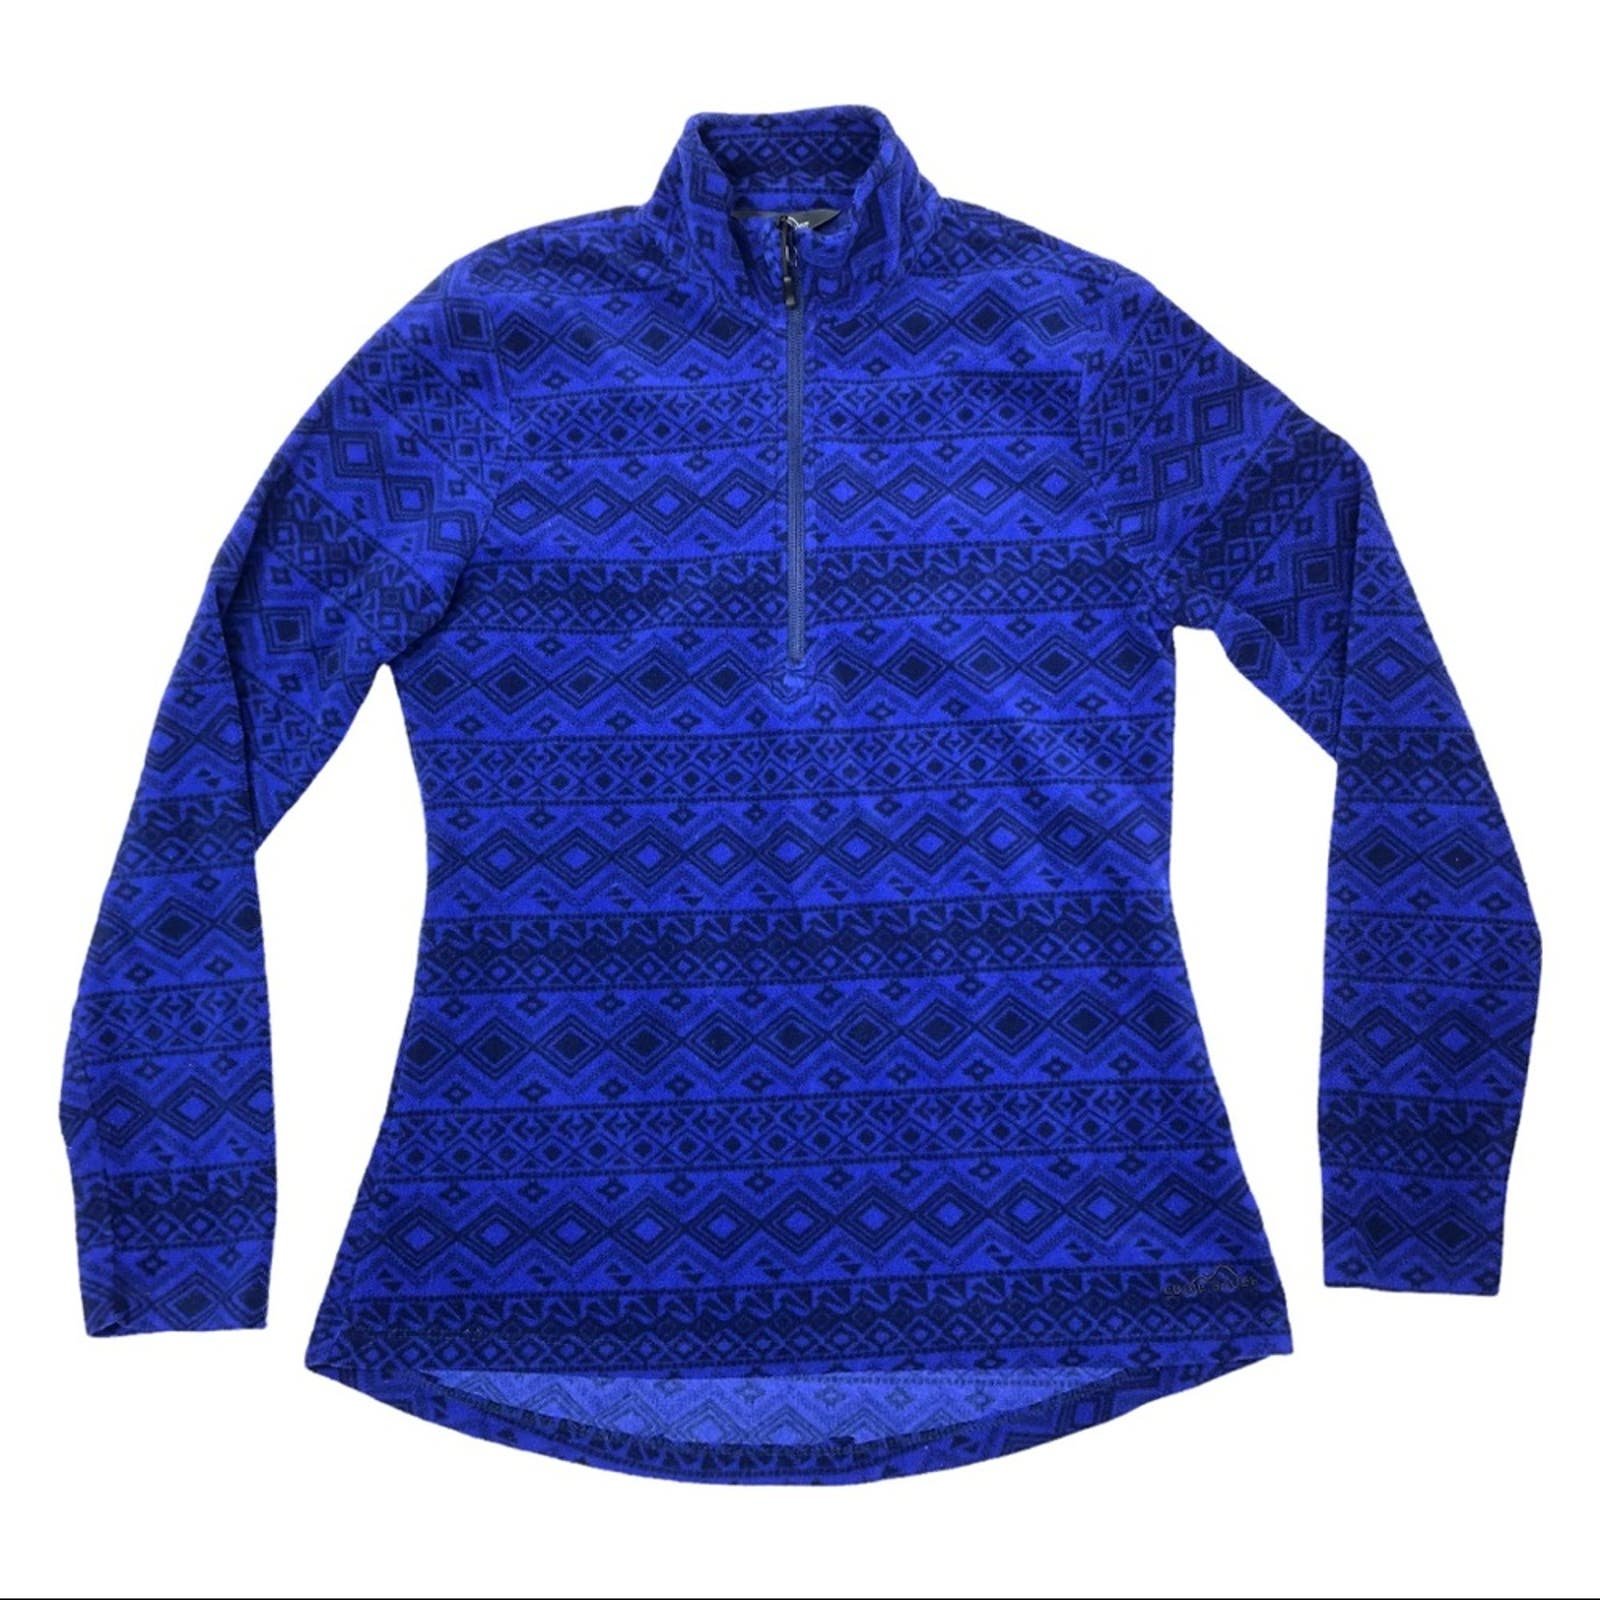 Wholesale price Eddie Bauer 1/4 zip fleece pullover blu